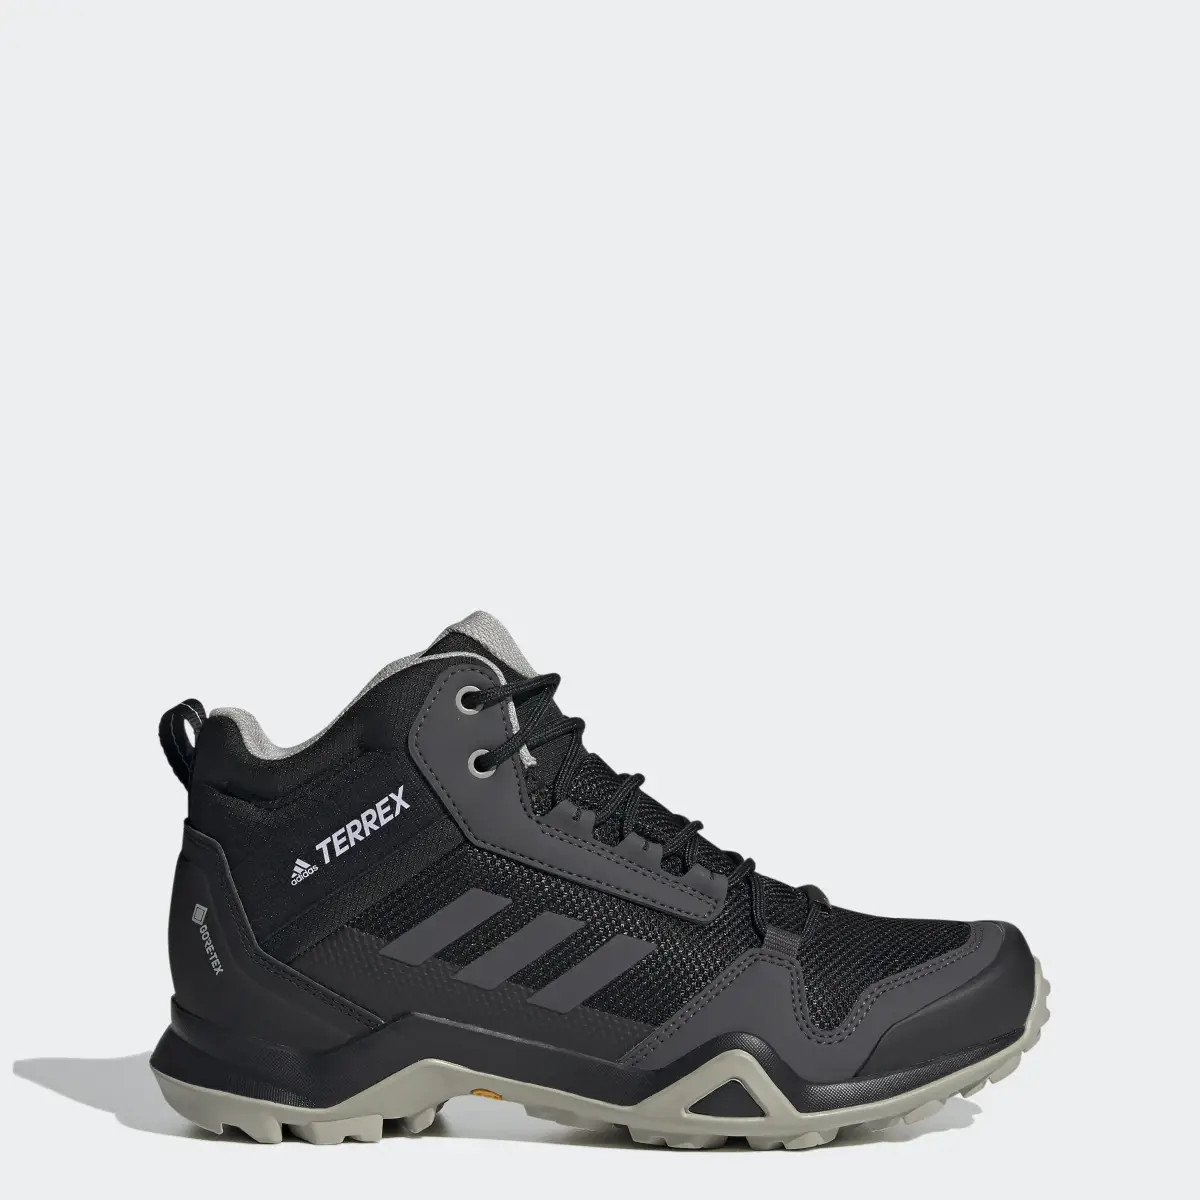 Adidas Sapatos de Caminhada AX3 Mid GORE-TEX TERREX. 1